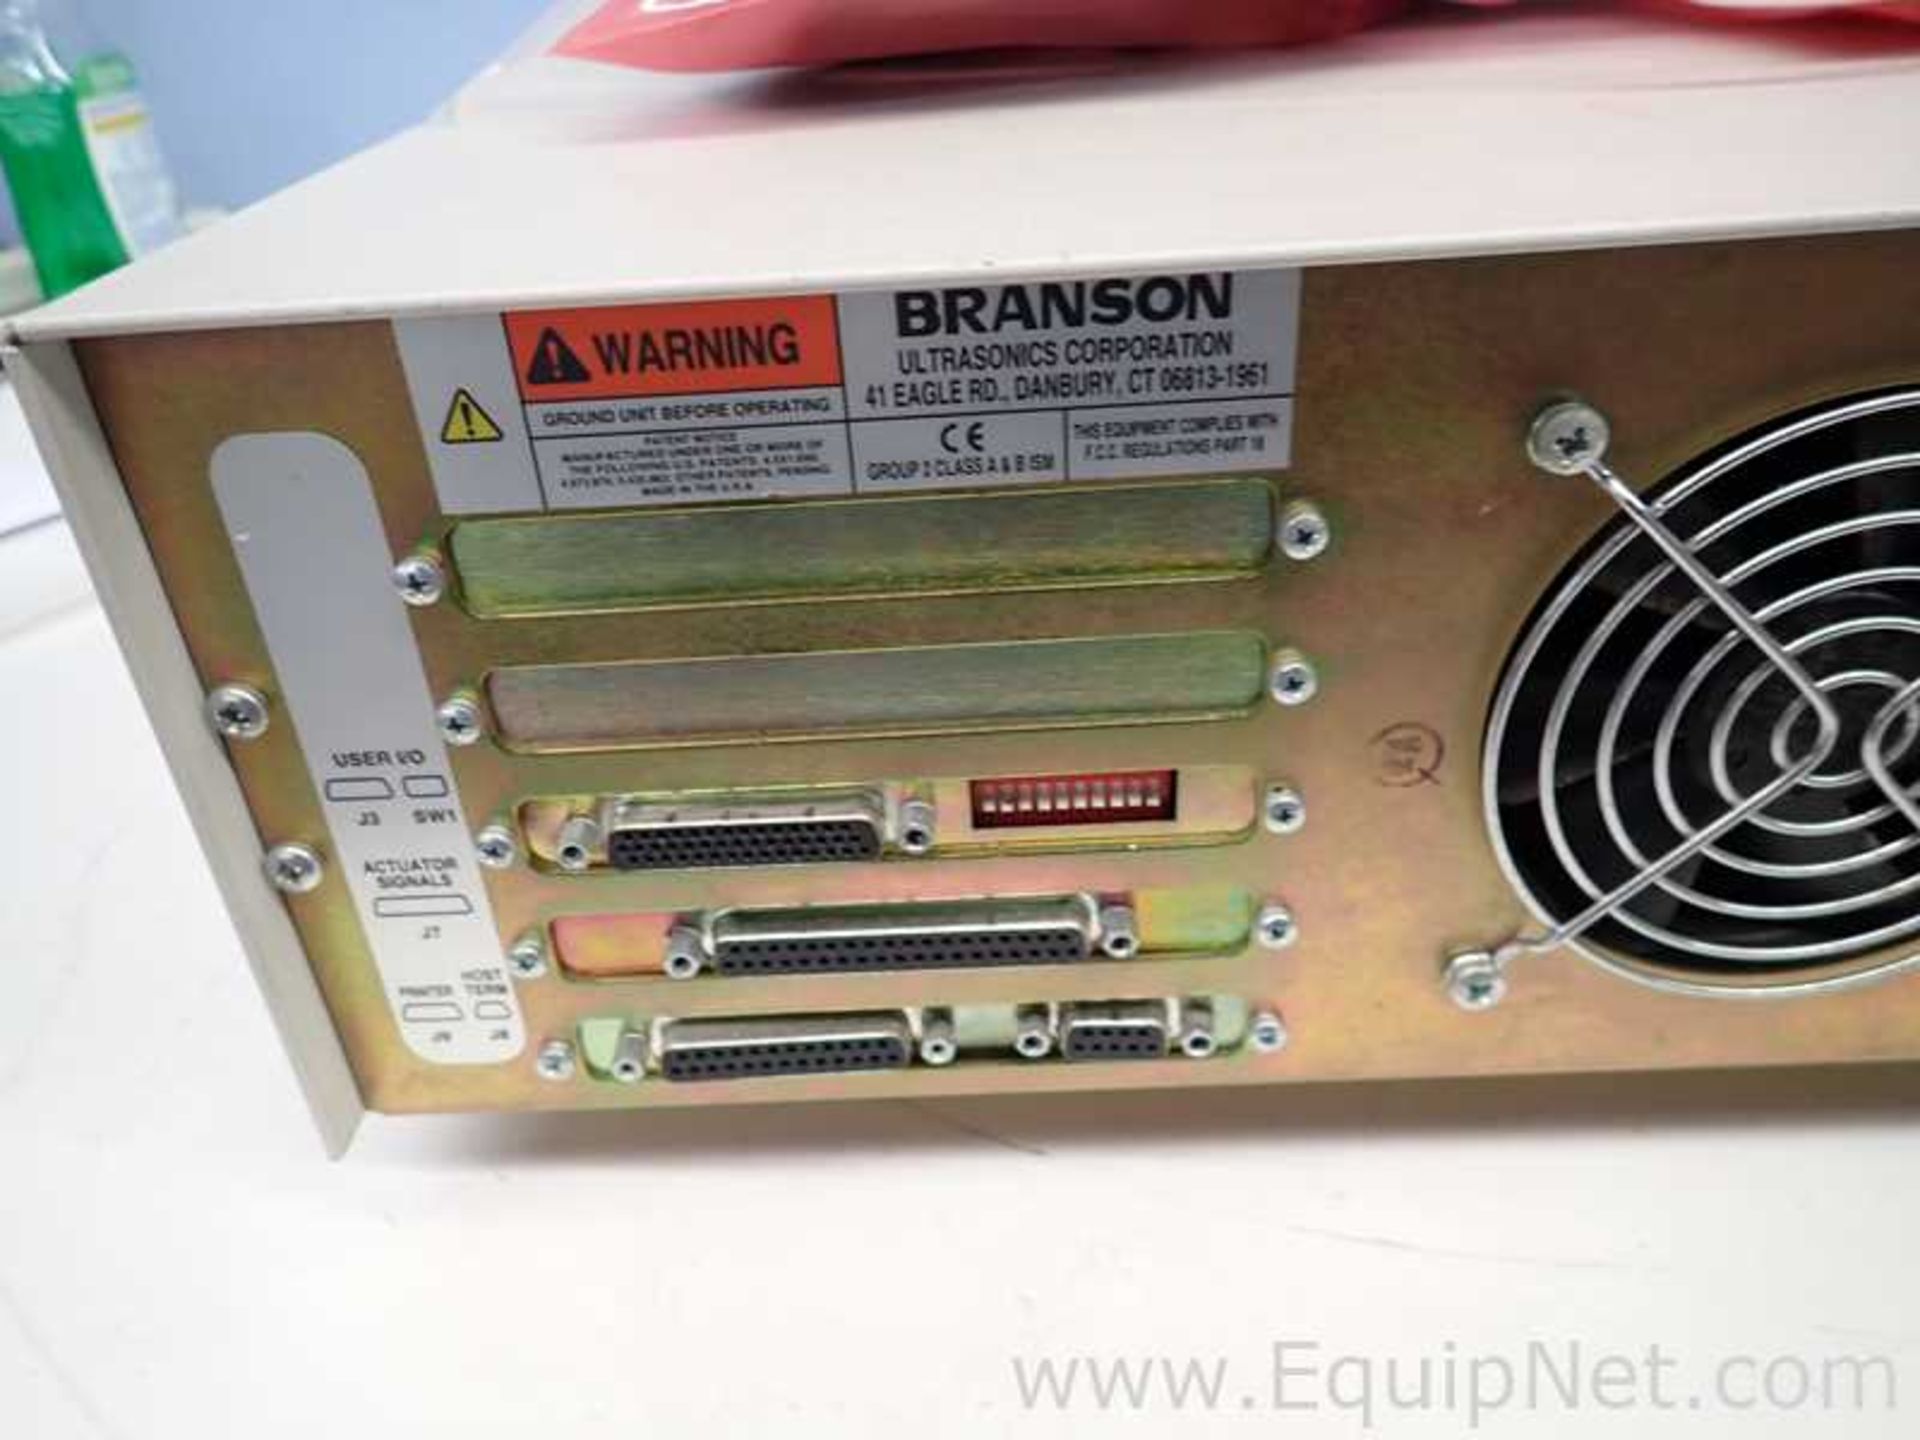 Branson Ultrasonic Corporation 2000aed 2.5 Ultrasonic Welder w/ 2000d Power Supply - Image 18 of 19